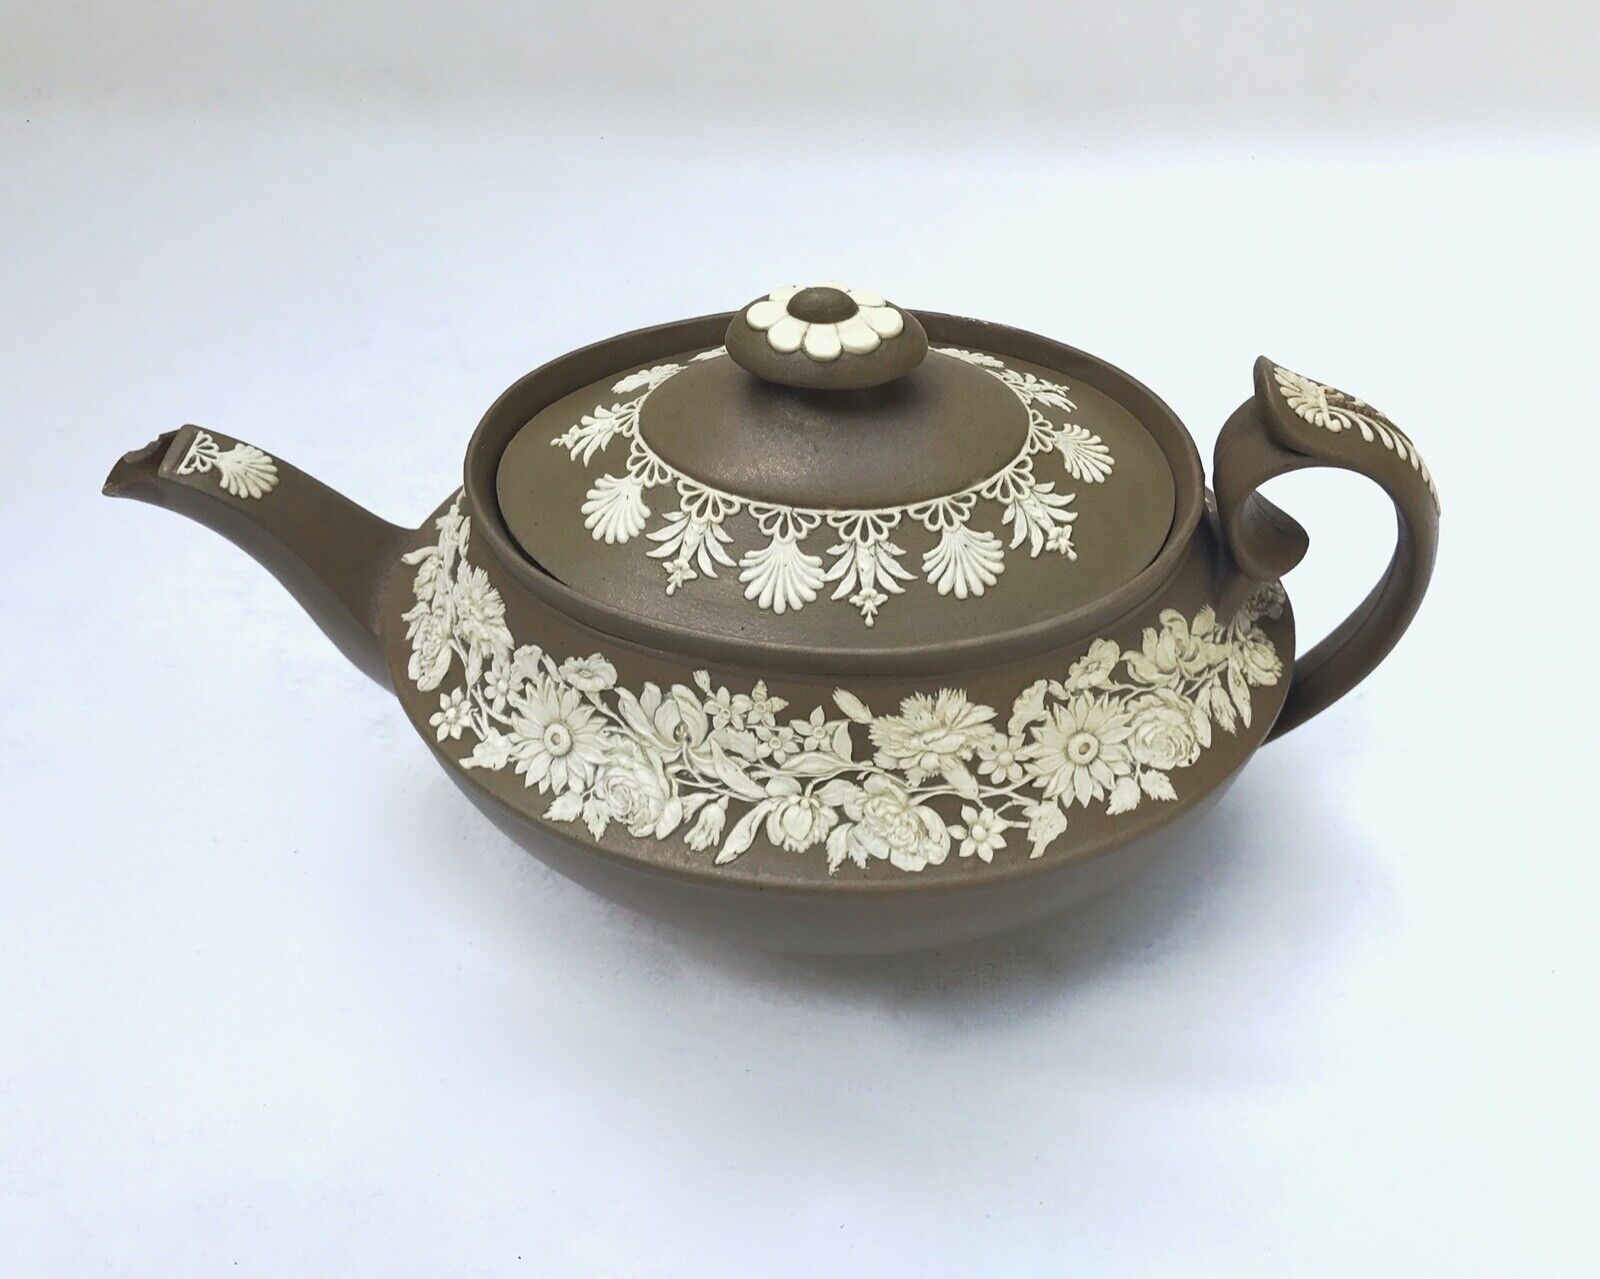 David Wilson Brown Stoneware Teapot, c. 1810